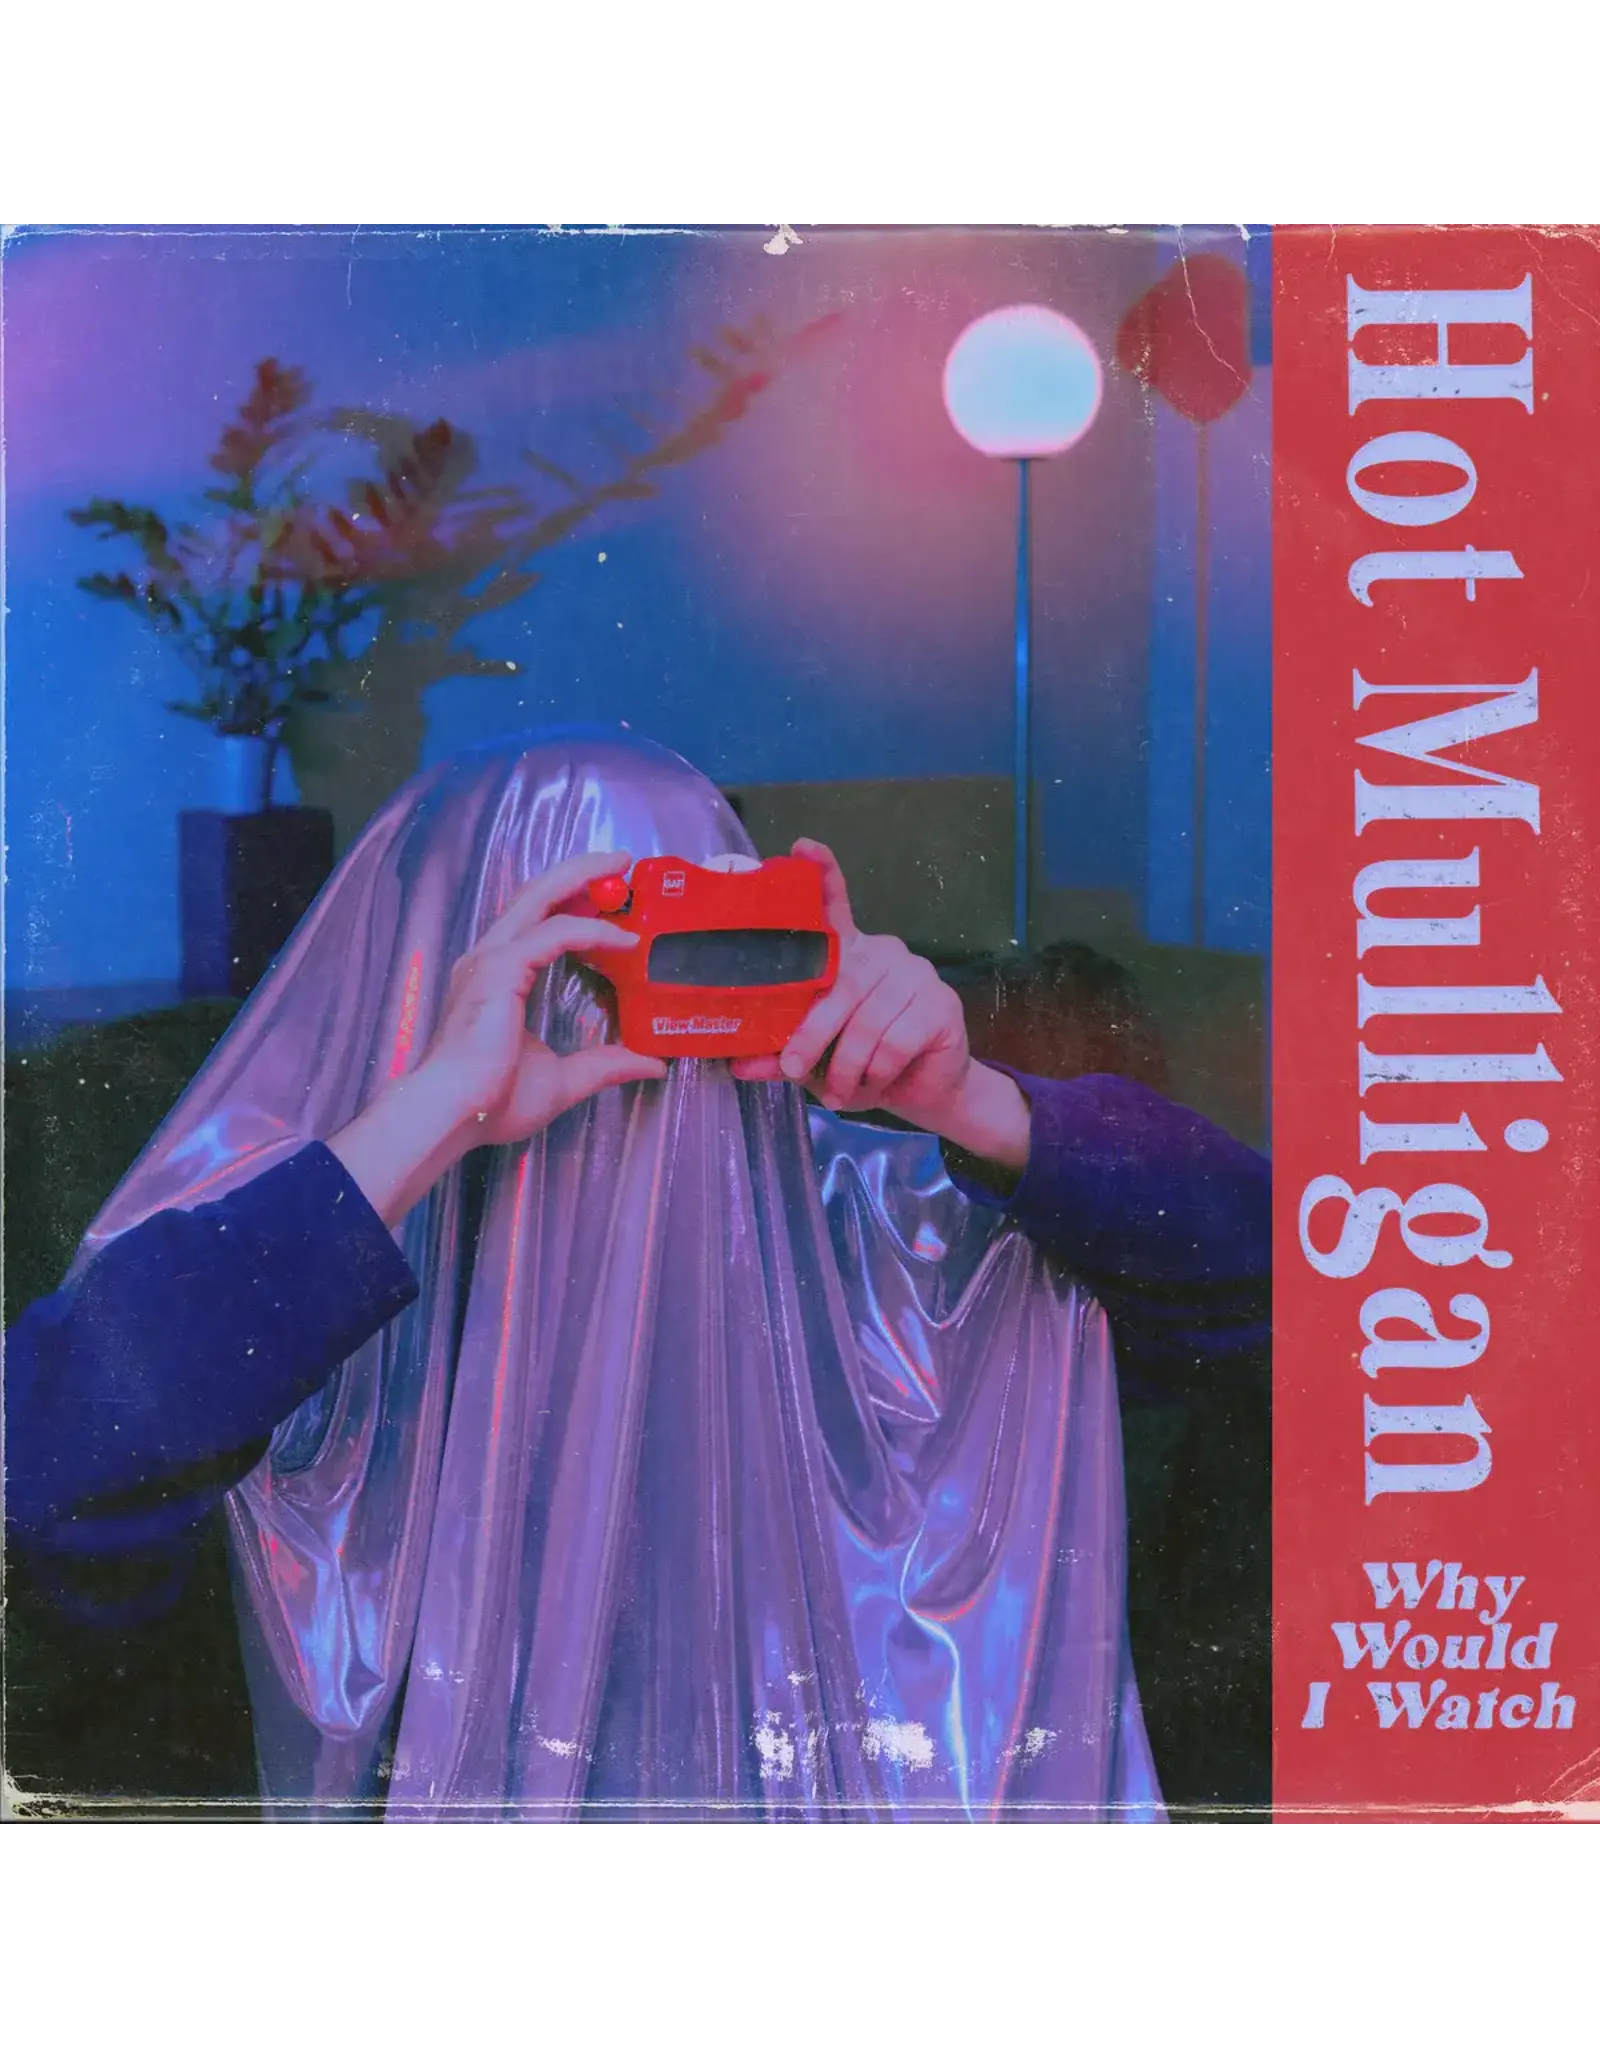 Hot Mulligan - Why Would I Watch (Blue Vinyl)